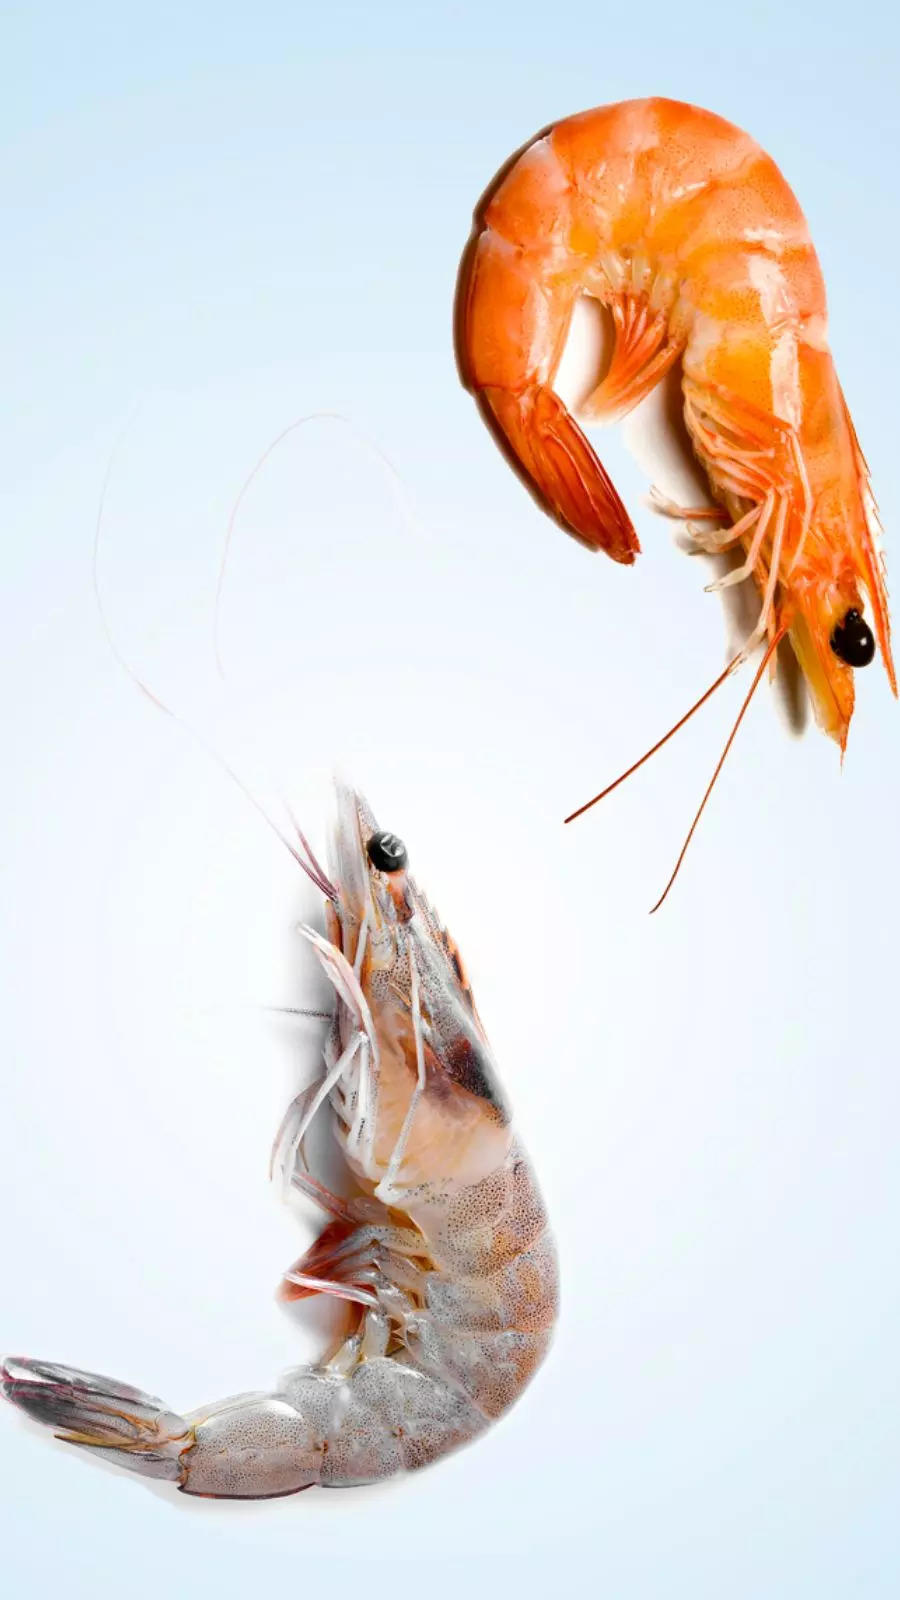 Shrimp Prawns Differences: 5 Key Differences Between Shrimp & Prawns